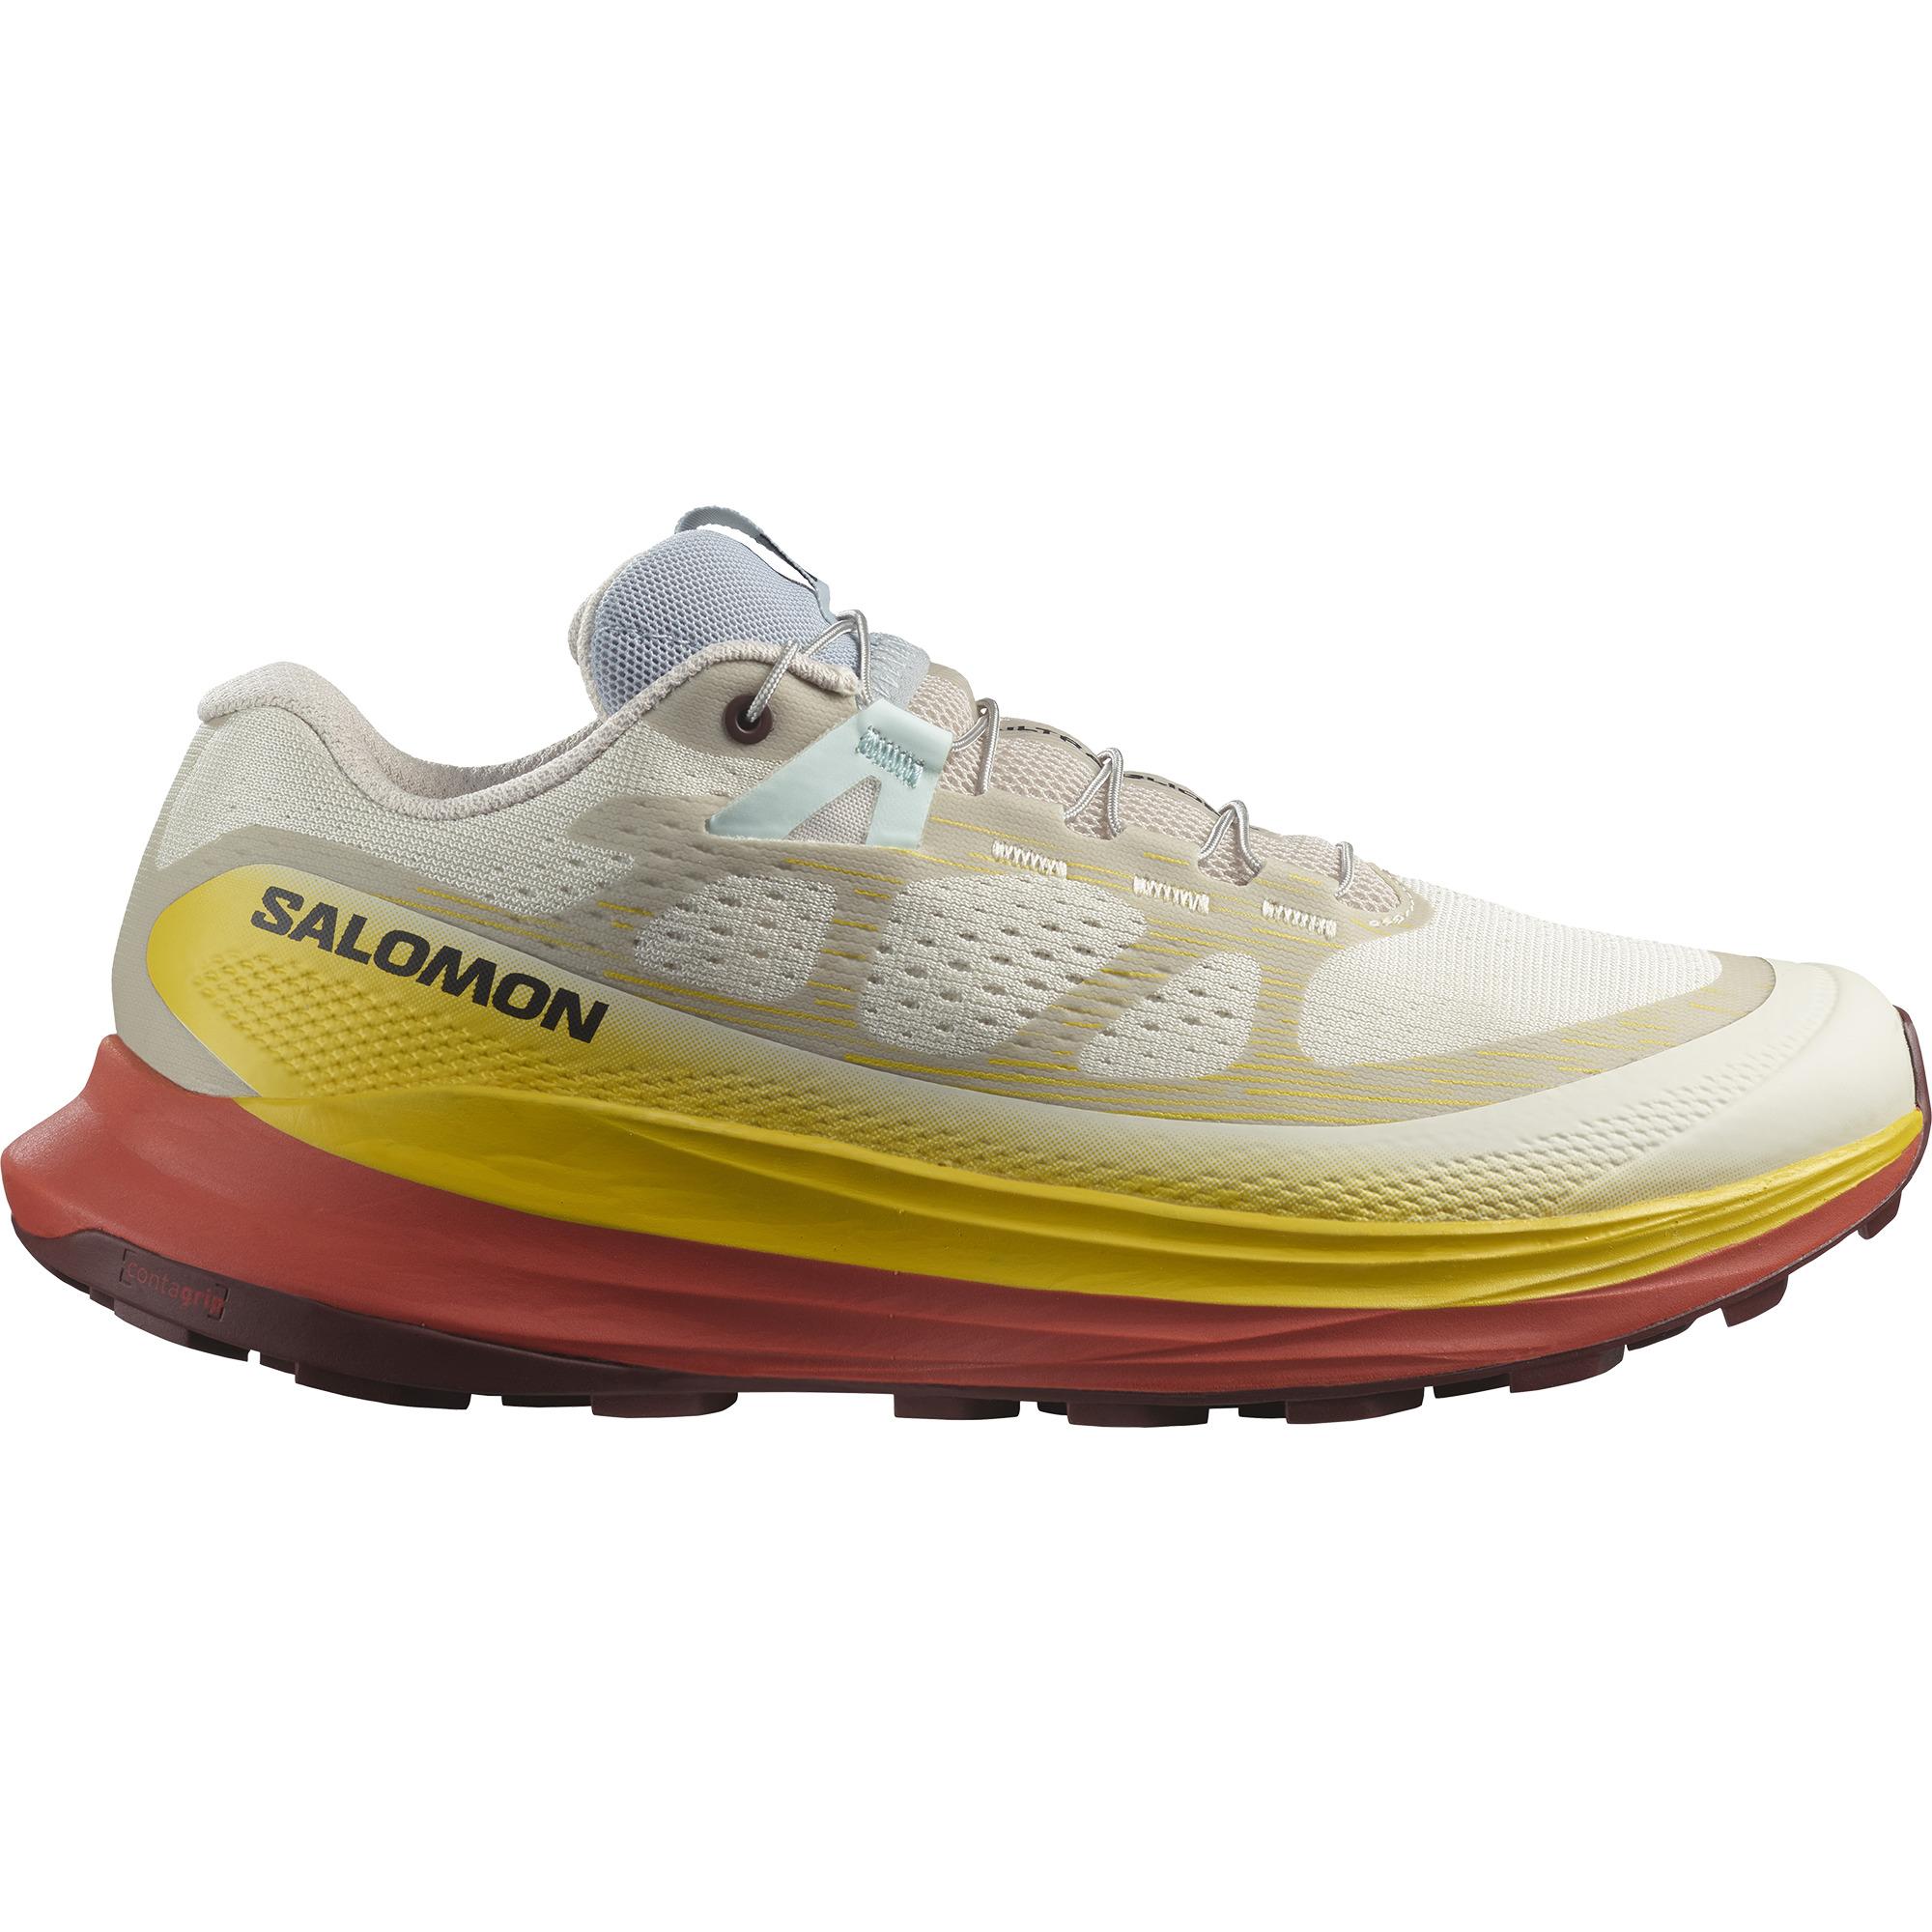 Salomon Womens Ultra Glide 2 Trail Shoes - Rainy Day/freesia/hot Sauce